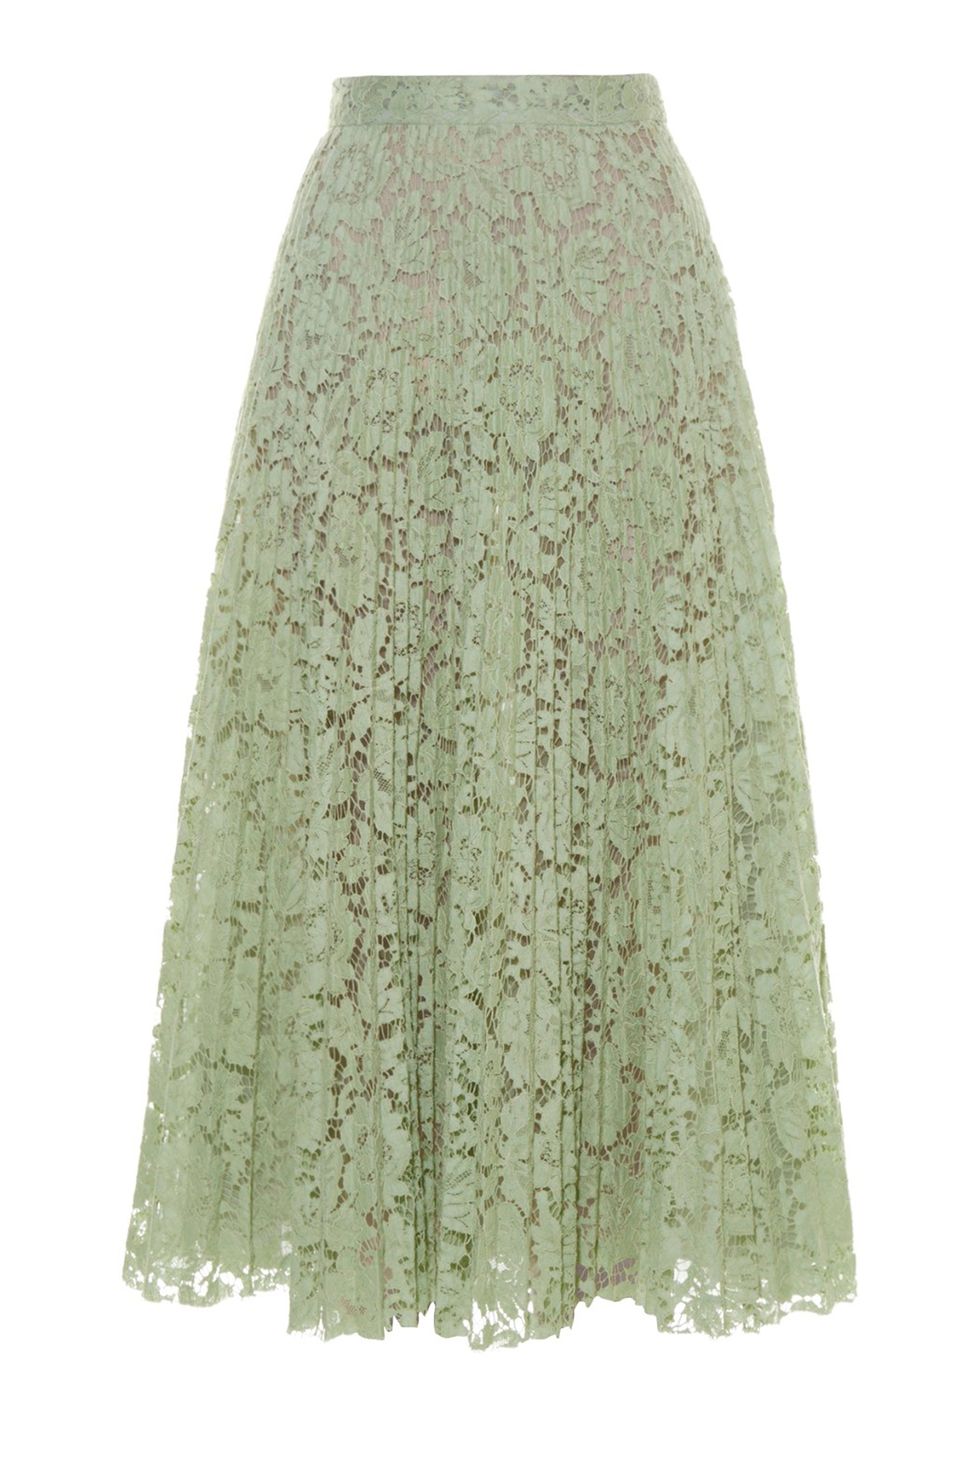 valentino mint green lace skirt